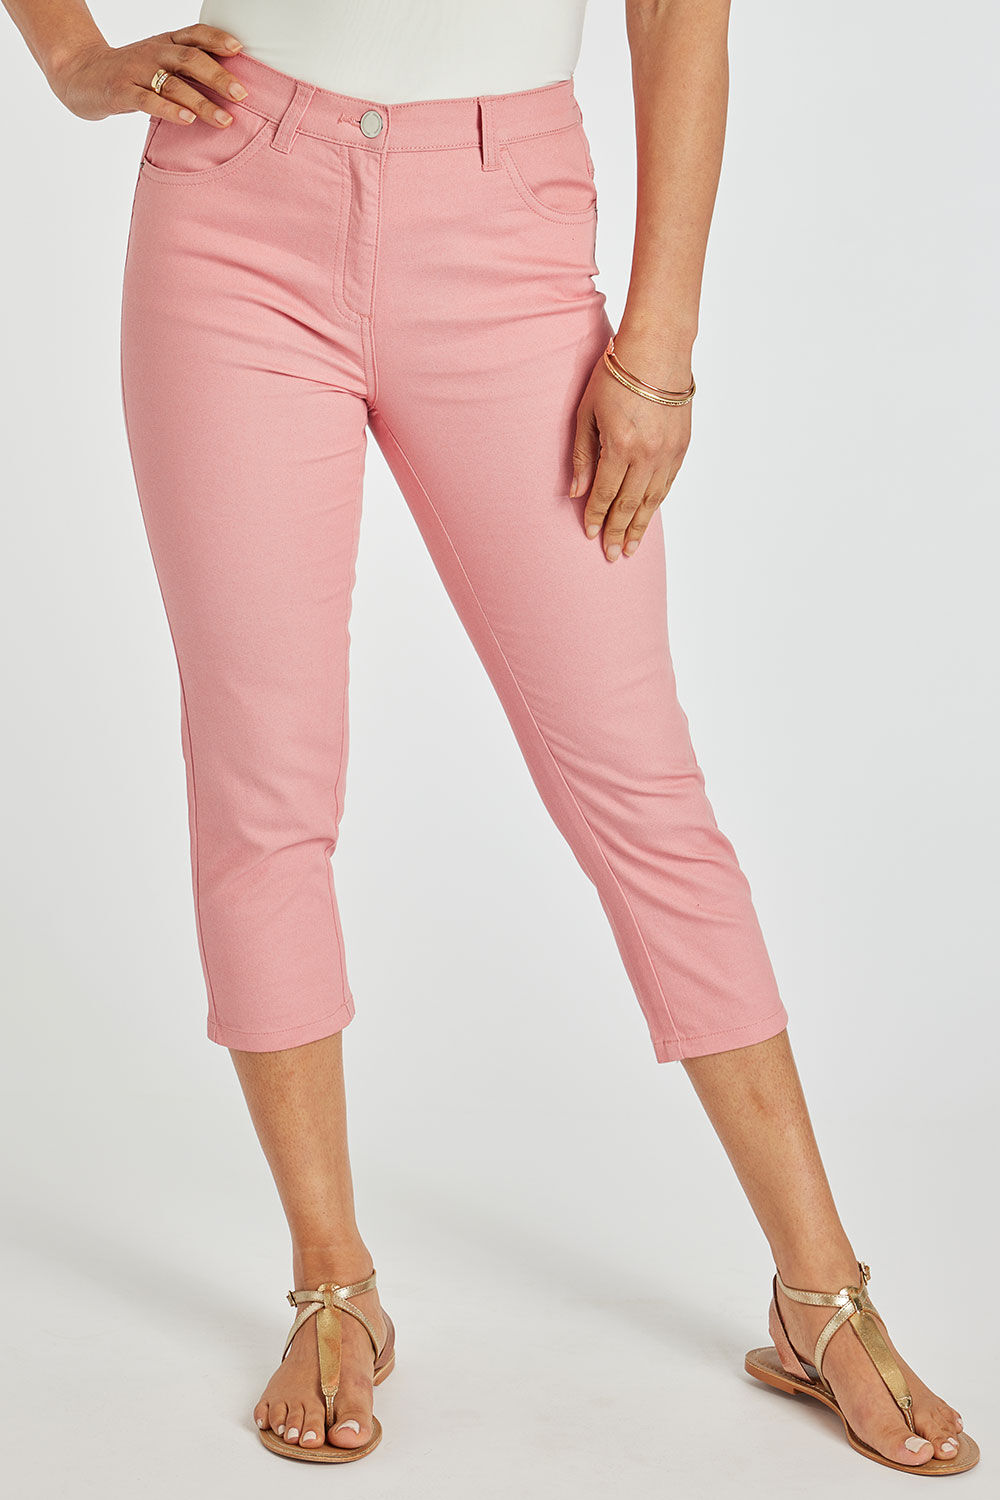 Bonmarche Peach The Sara Coloured Cropped Jeans, Size: 28